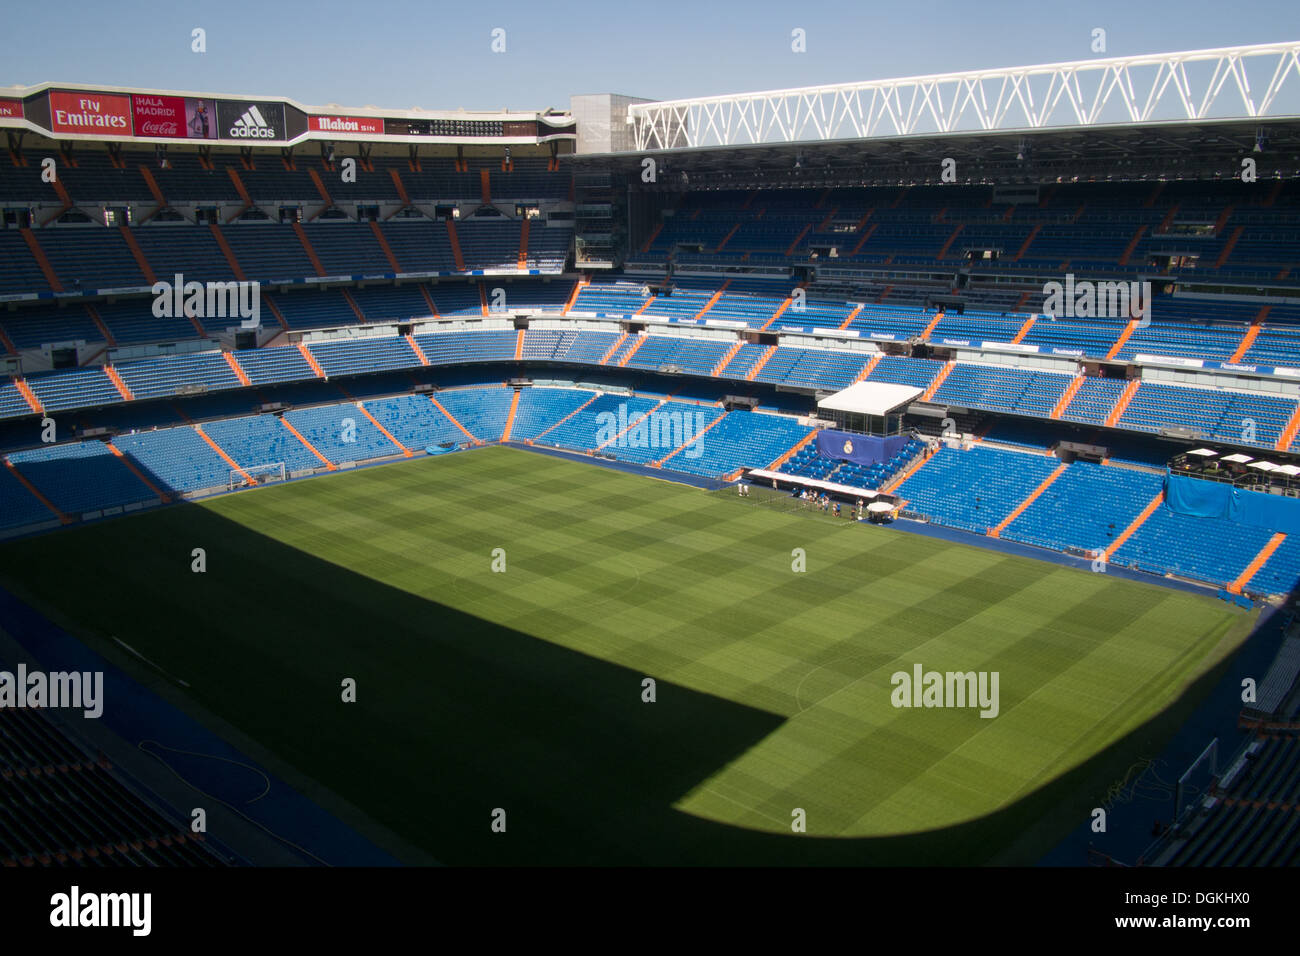 Le stade de football du Real Madrid, Madrid, capitale de l'Espagne Banque D'Images